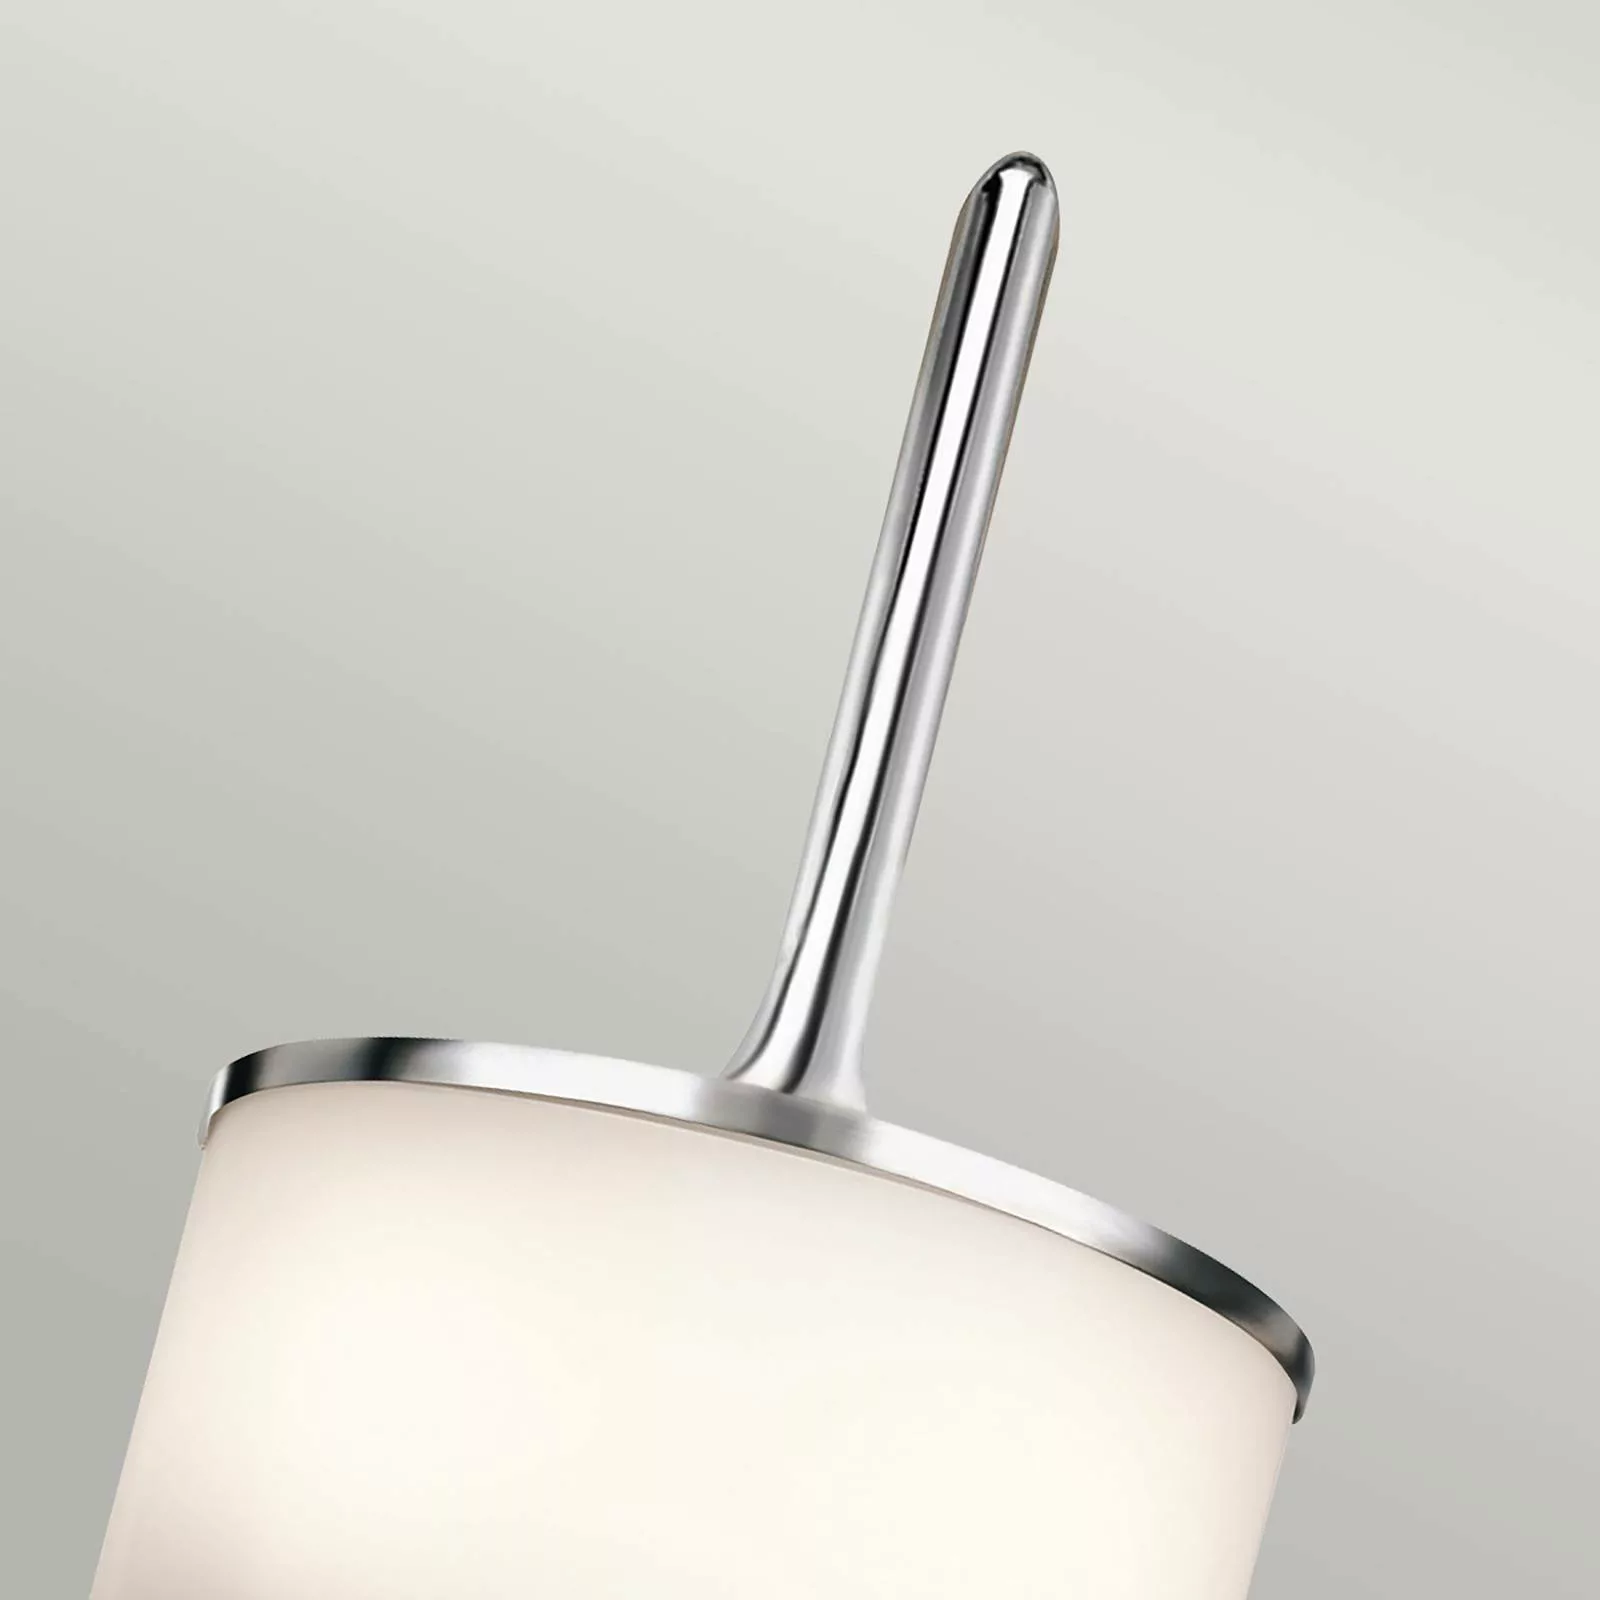 LED-Wandlampe Mona IP44 Höhe 55,9cm chrom poliert günstig online kaufen